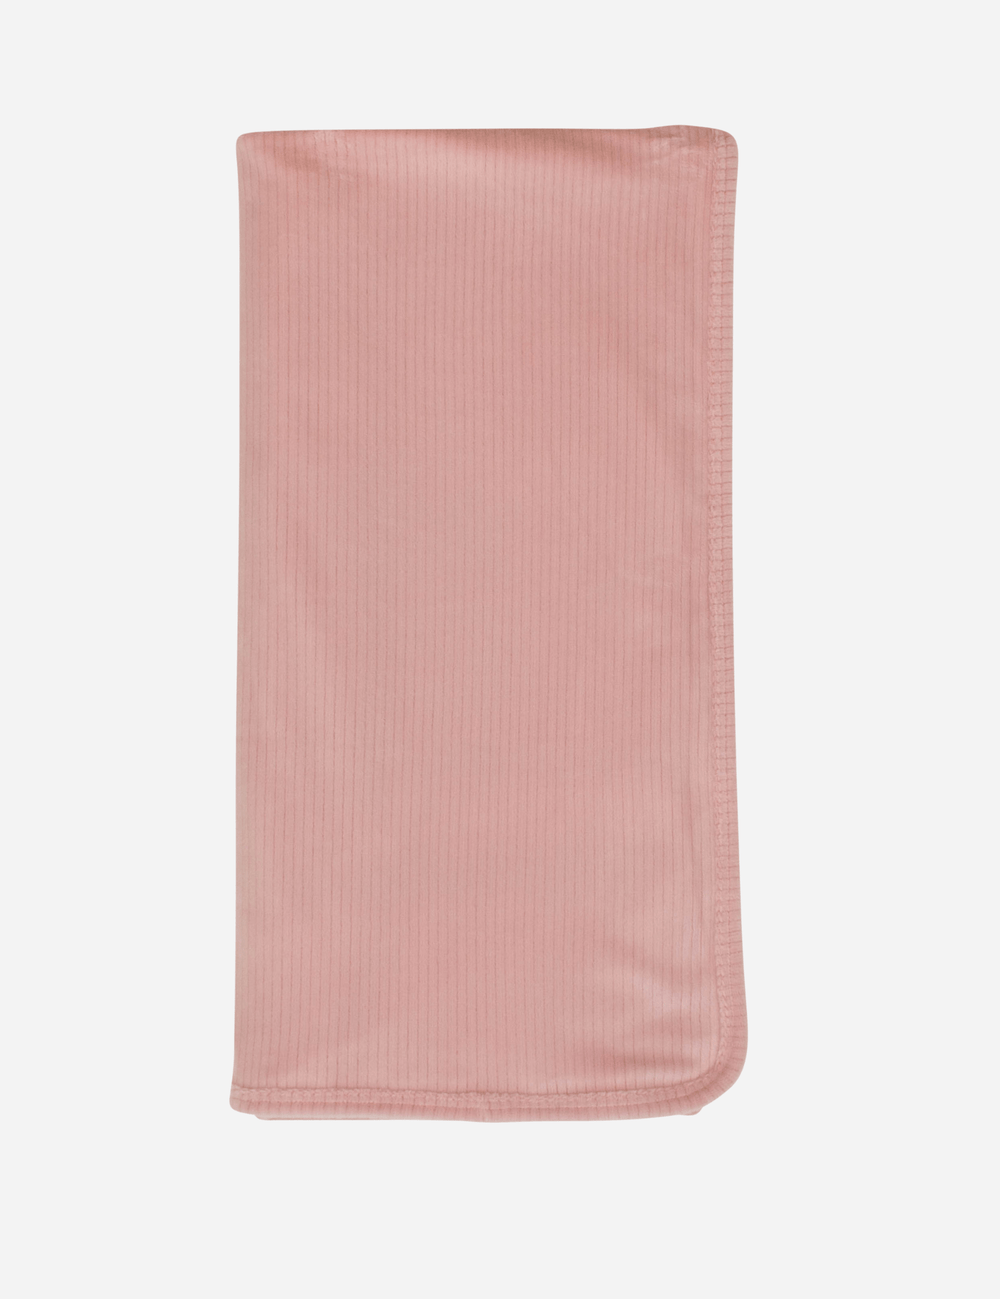 Rib Blanket - Pink